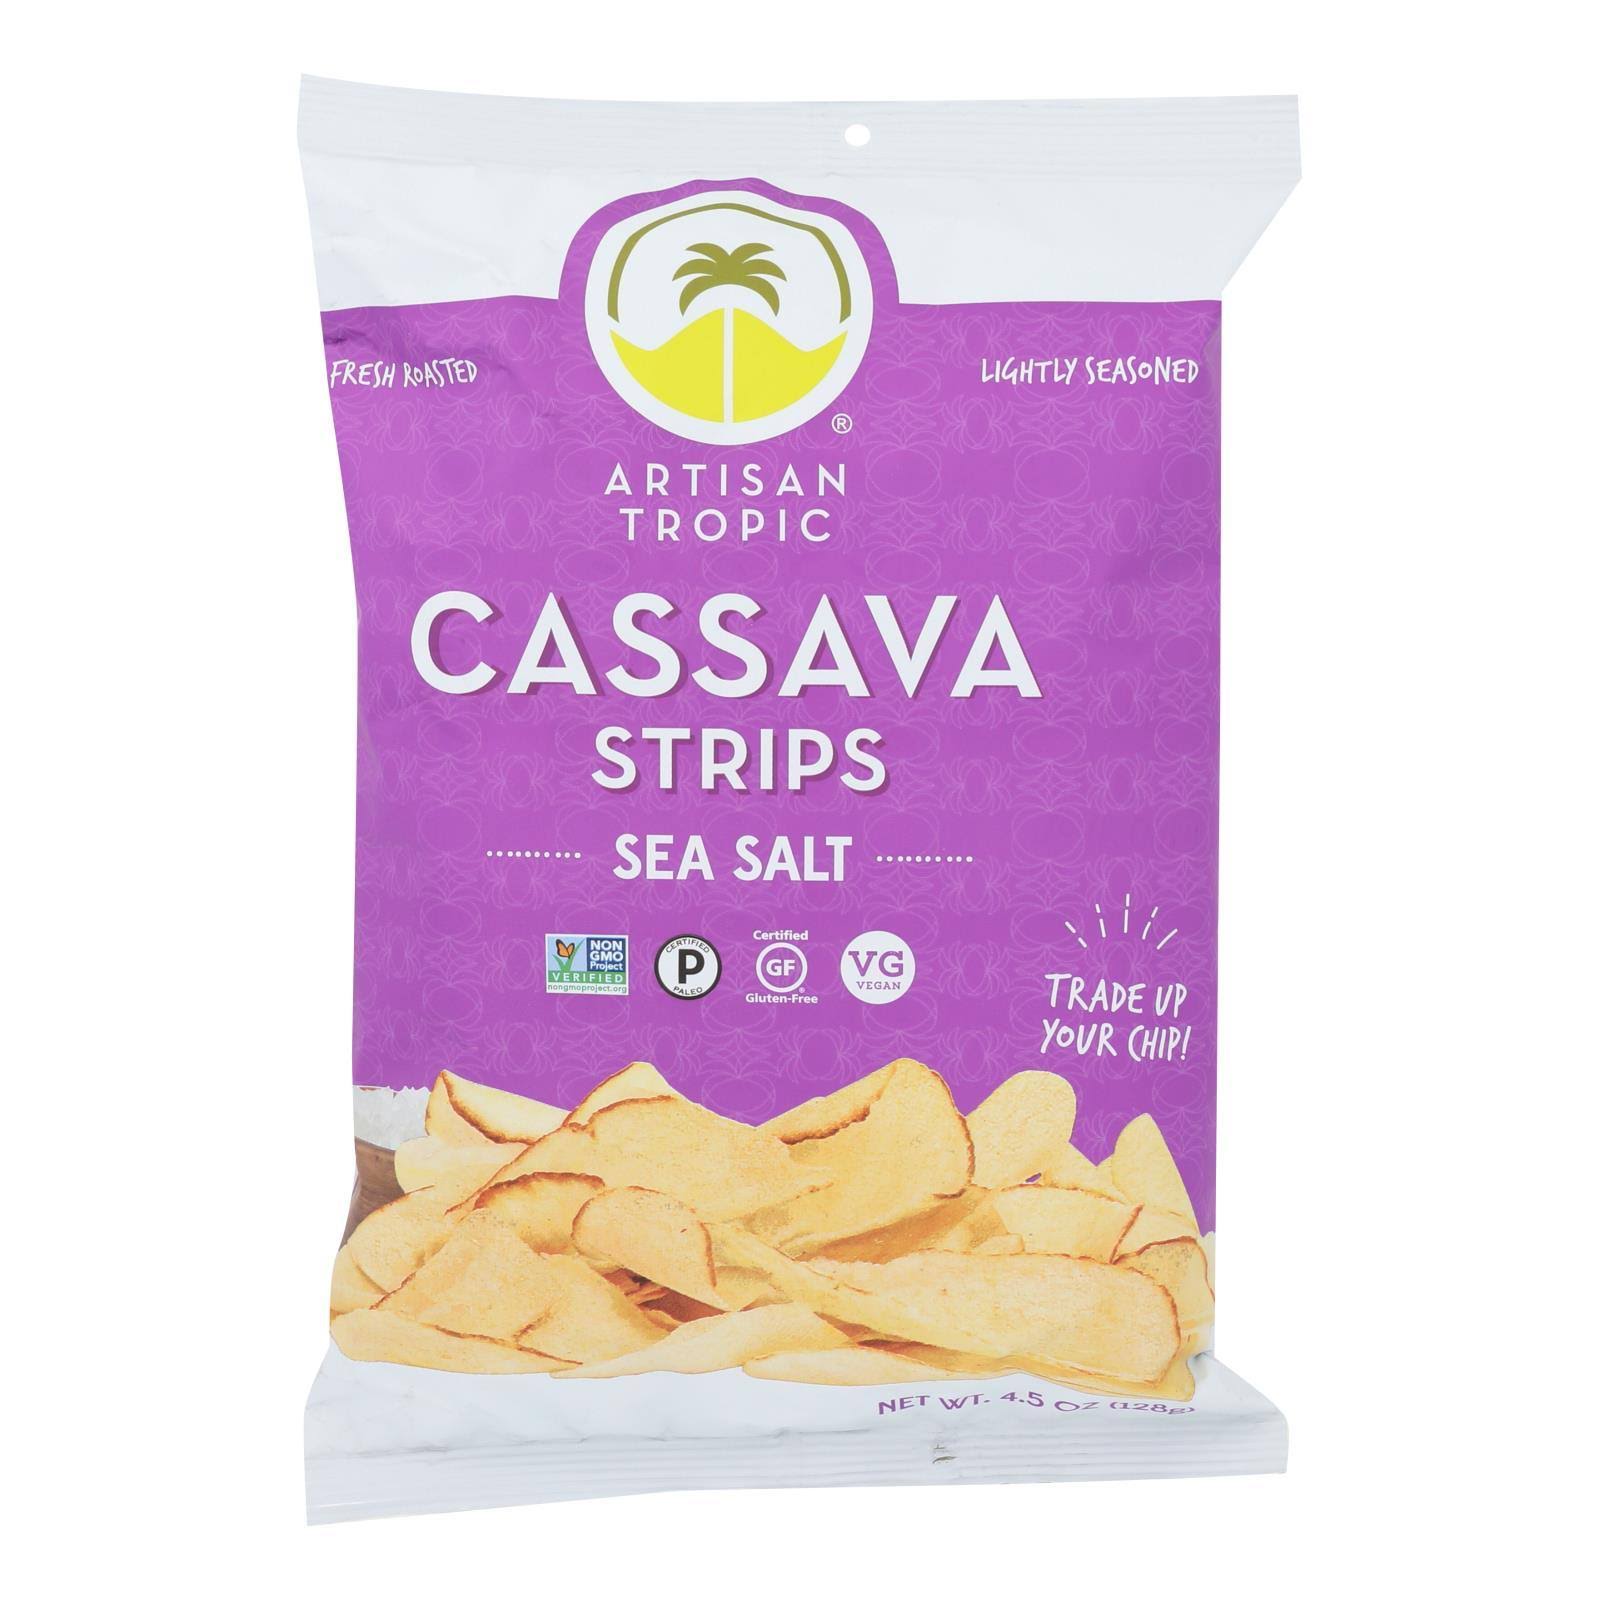 Artisan Tropic: Sea Salt Cassava Strips, 4.5 oz